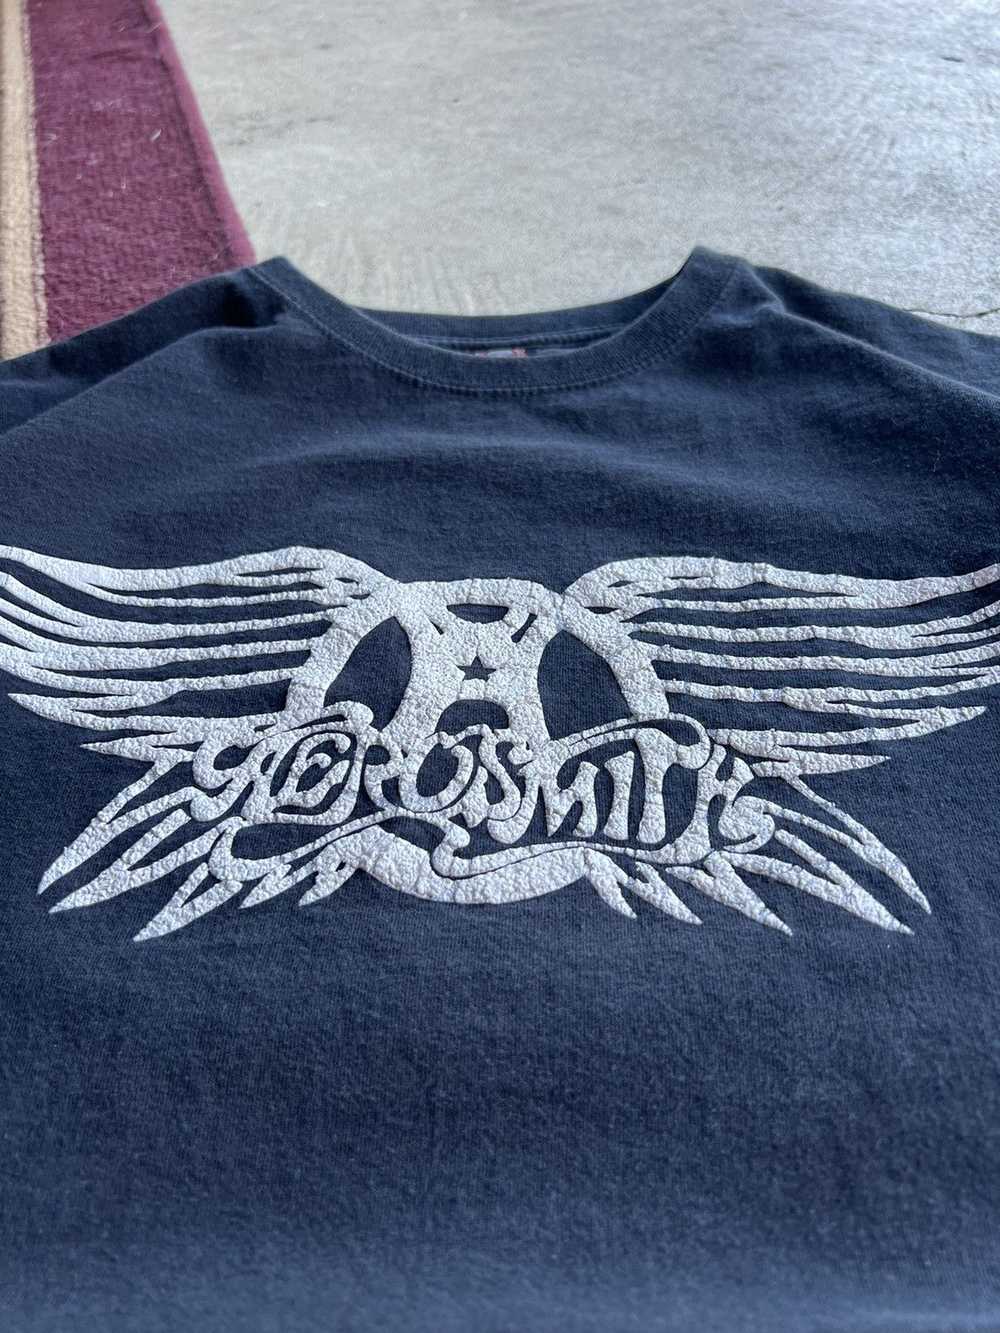 Band Tees × Streetwear × Vintage 90s Aerosmith Ba… - image 3